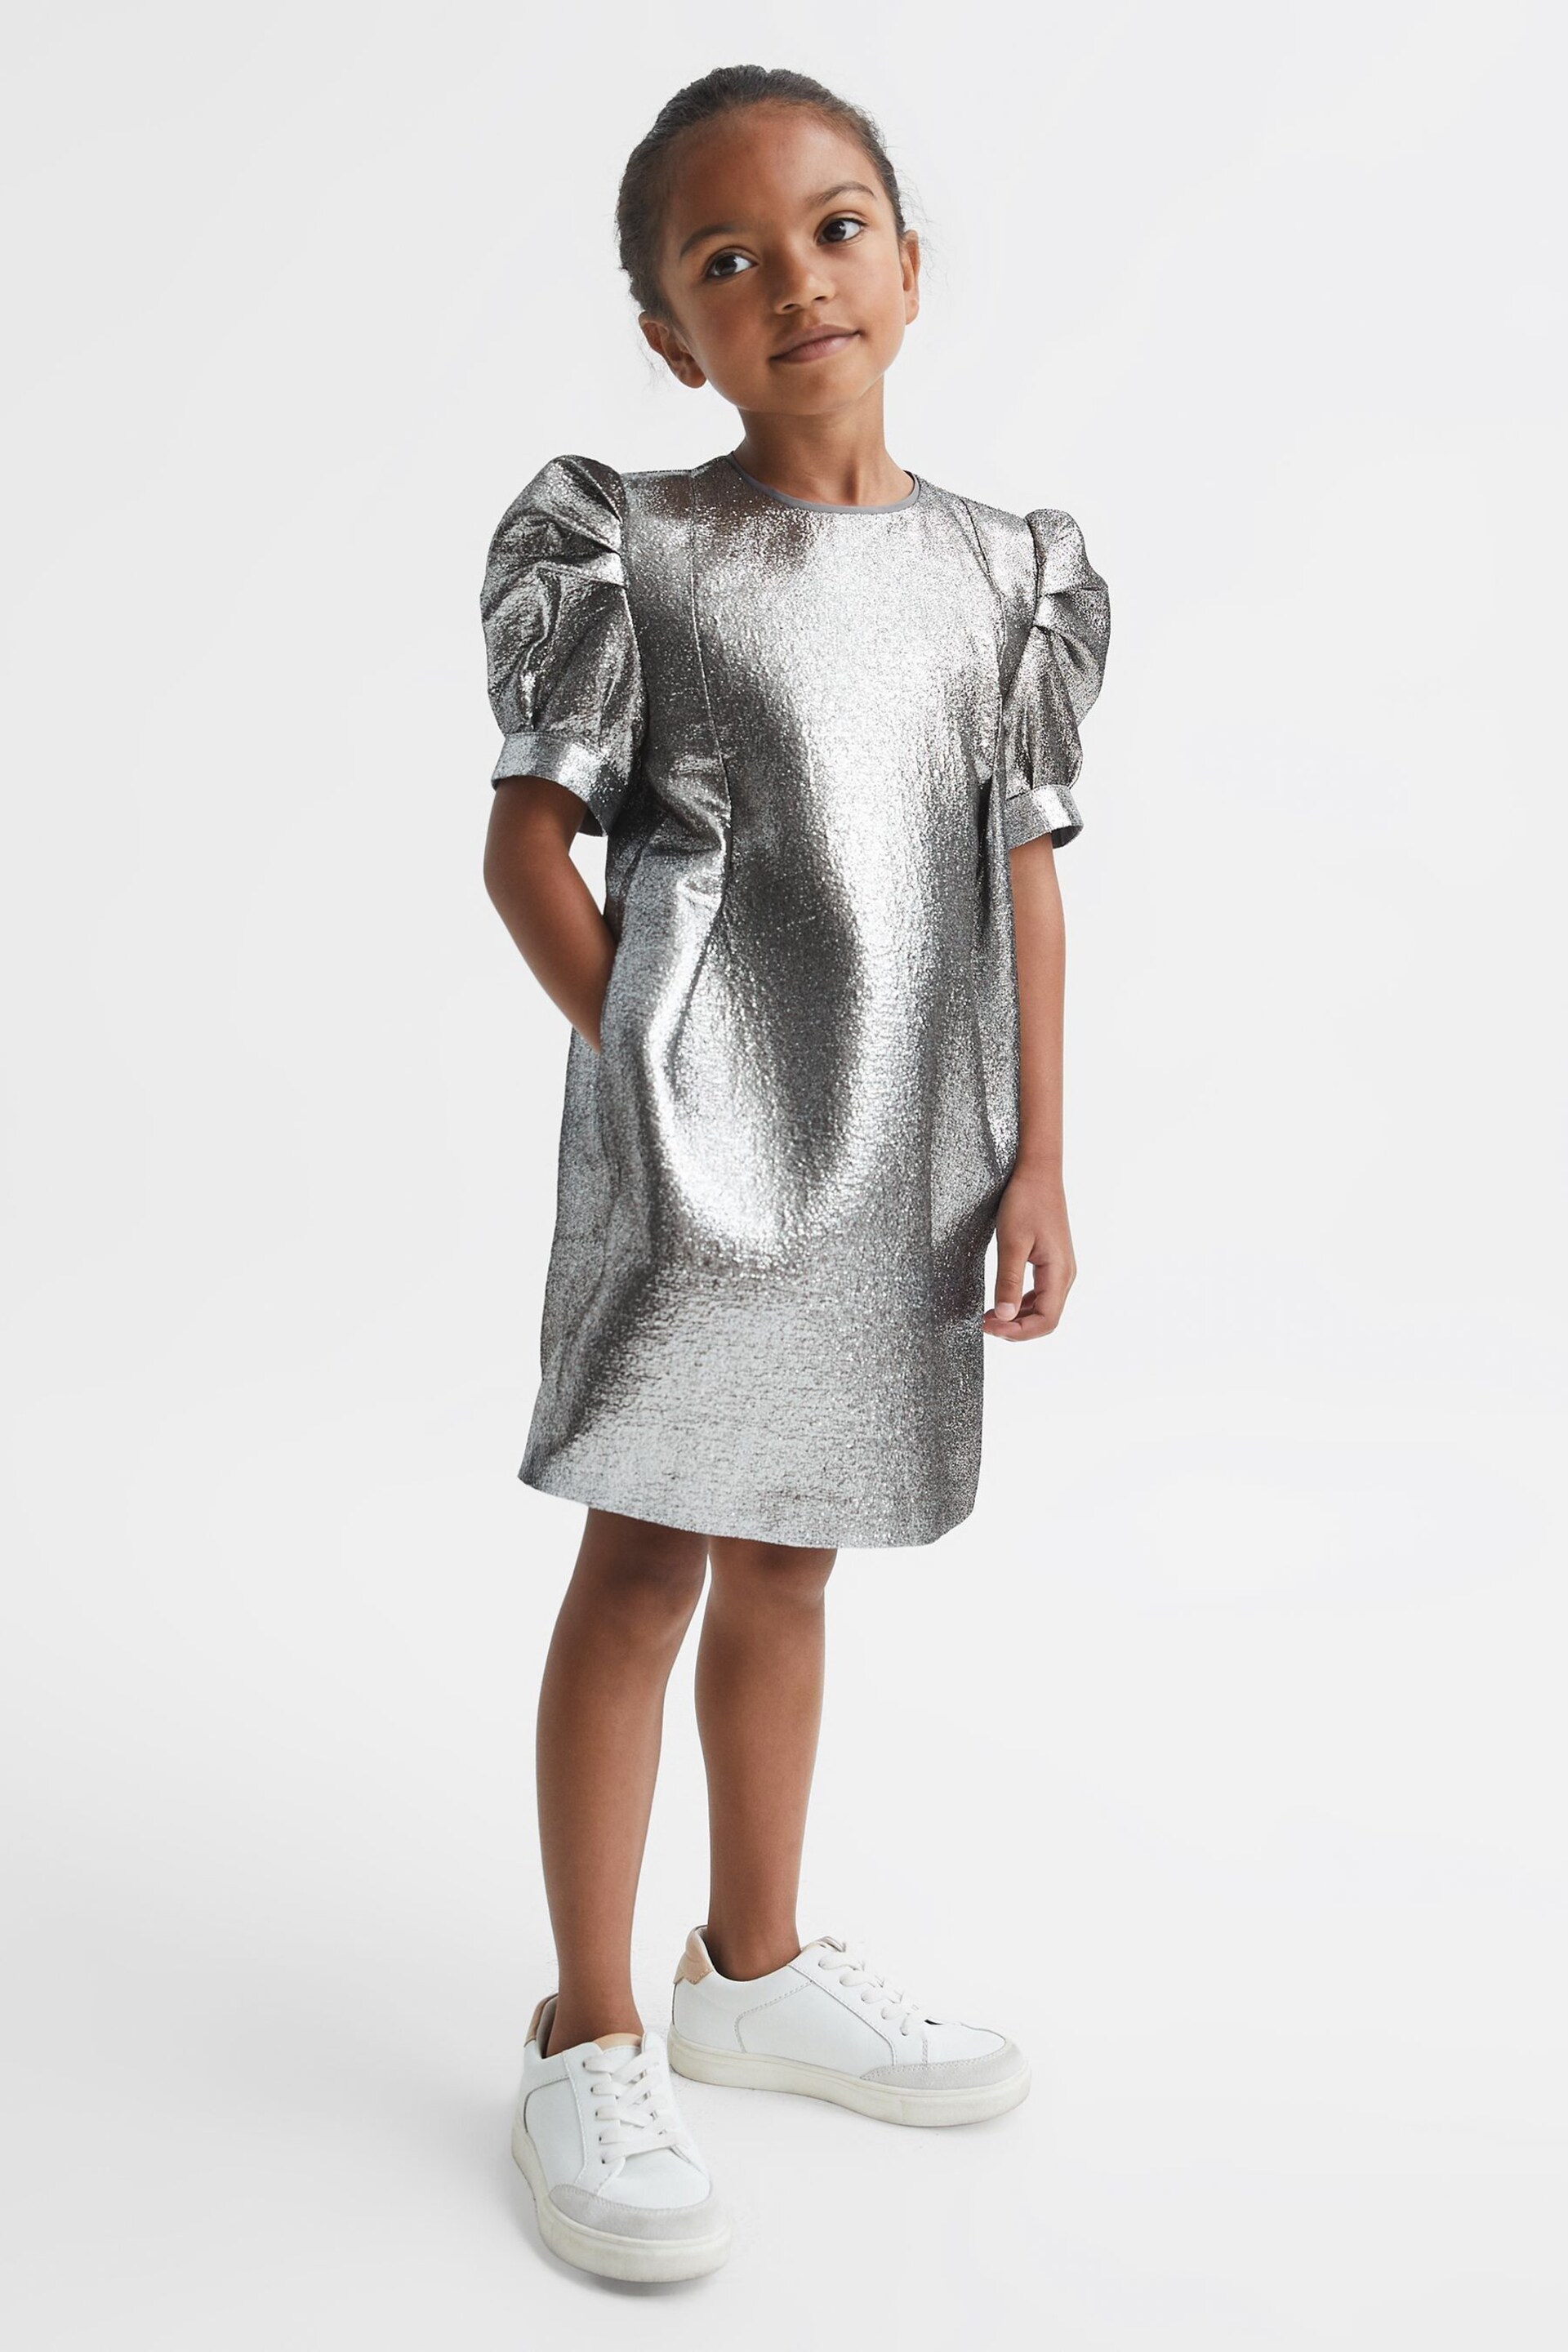 Reiss Silver Ellie Senior Metallic Shoulder Detail Dress - Image 1 of 6